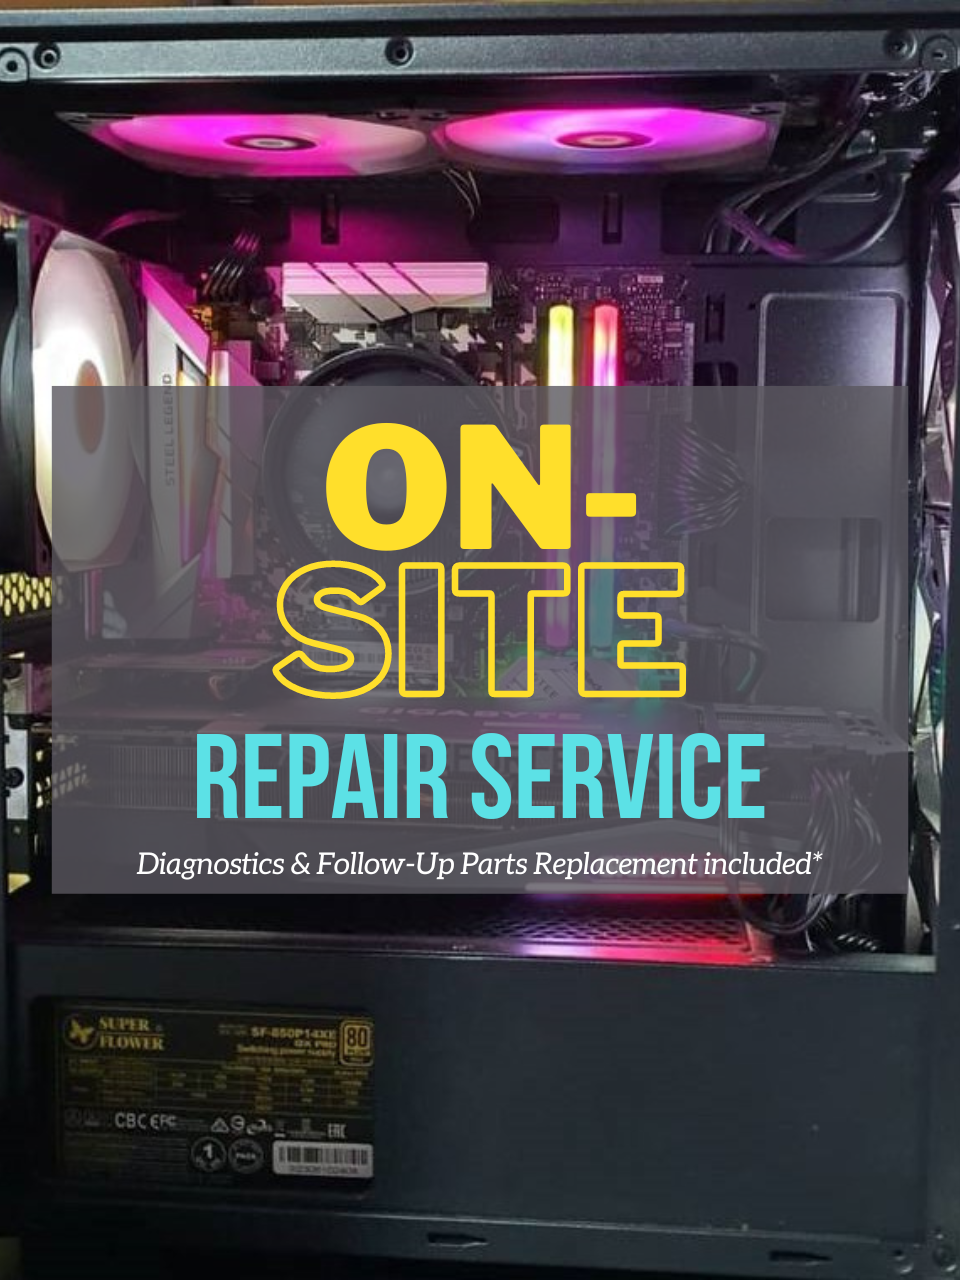 ON-SITE PC Repair Service - New PC